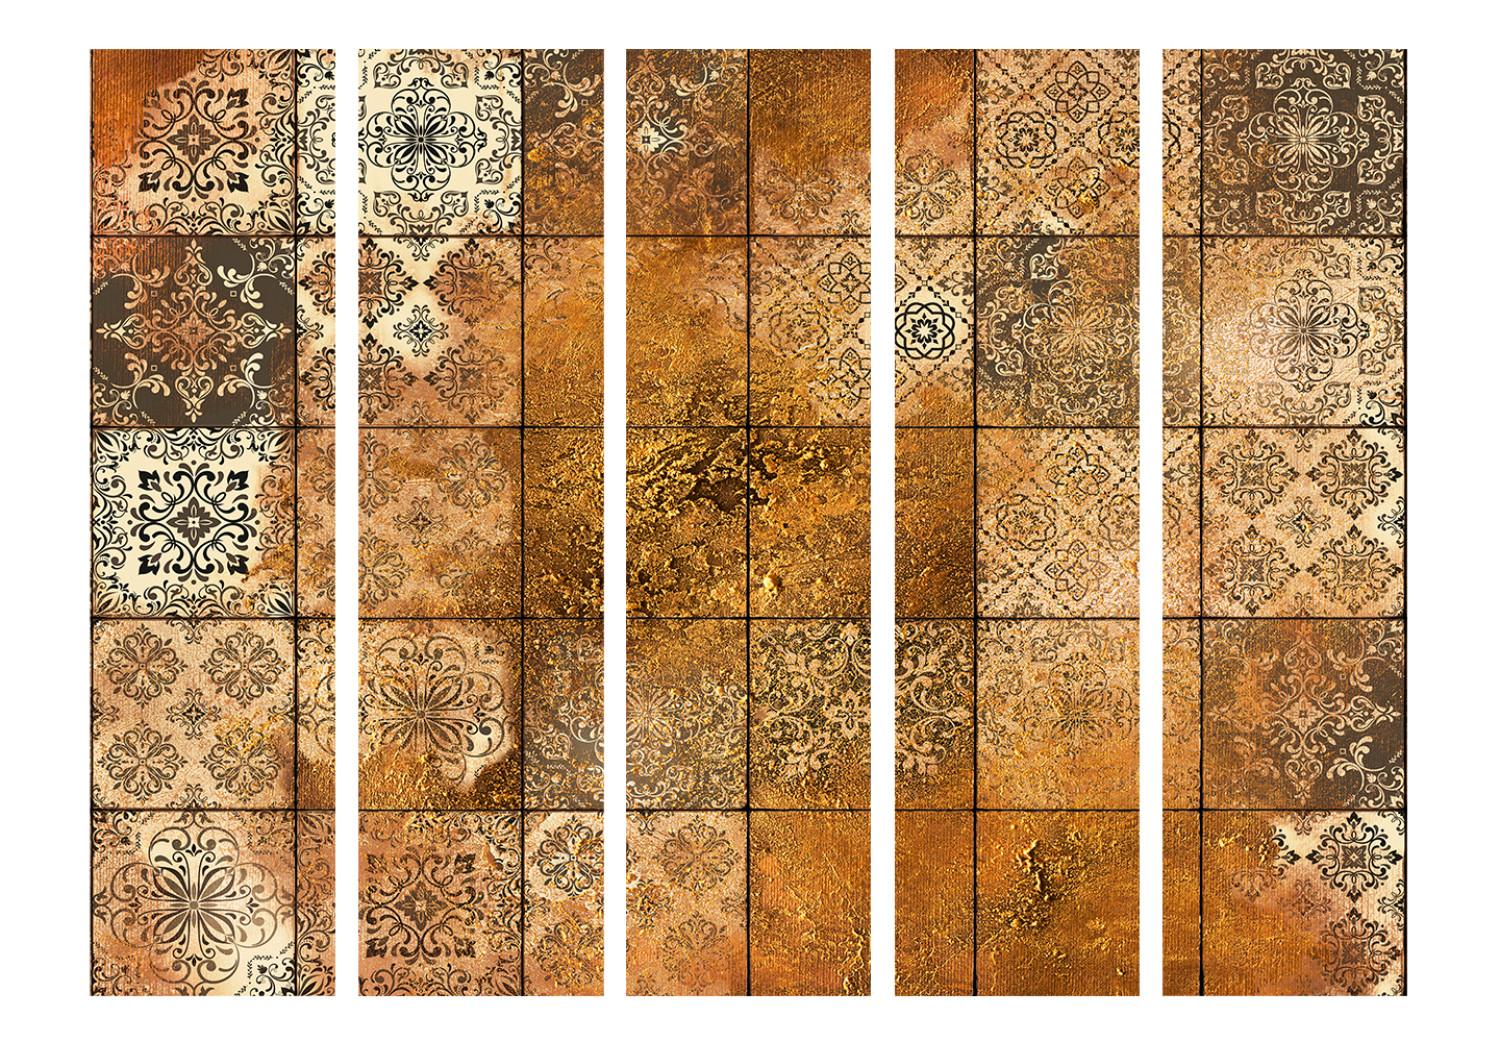 Room Divider Old Tiles II - tiles with oriental mandala patterns in Zen motif